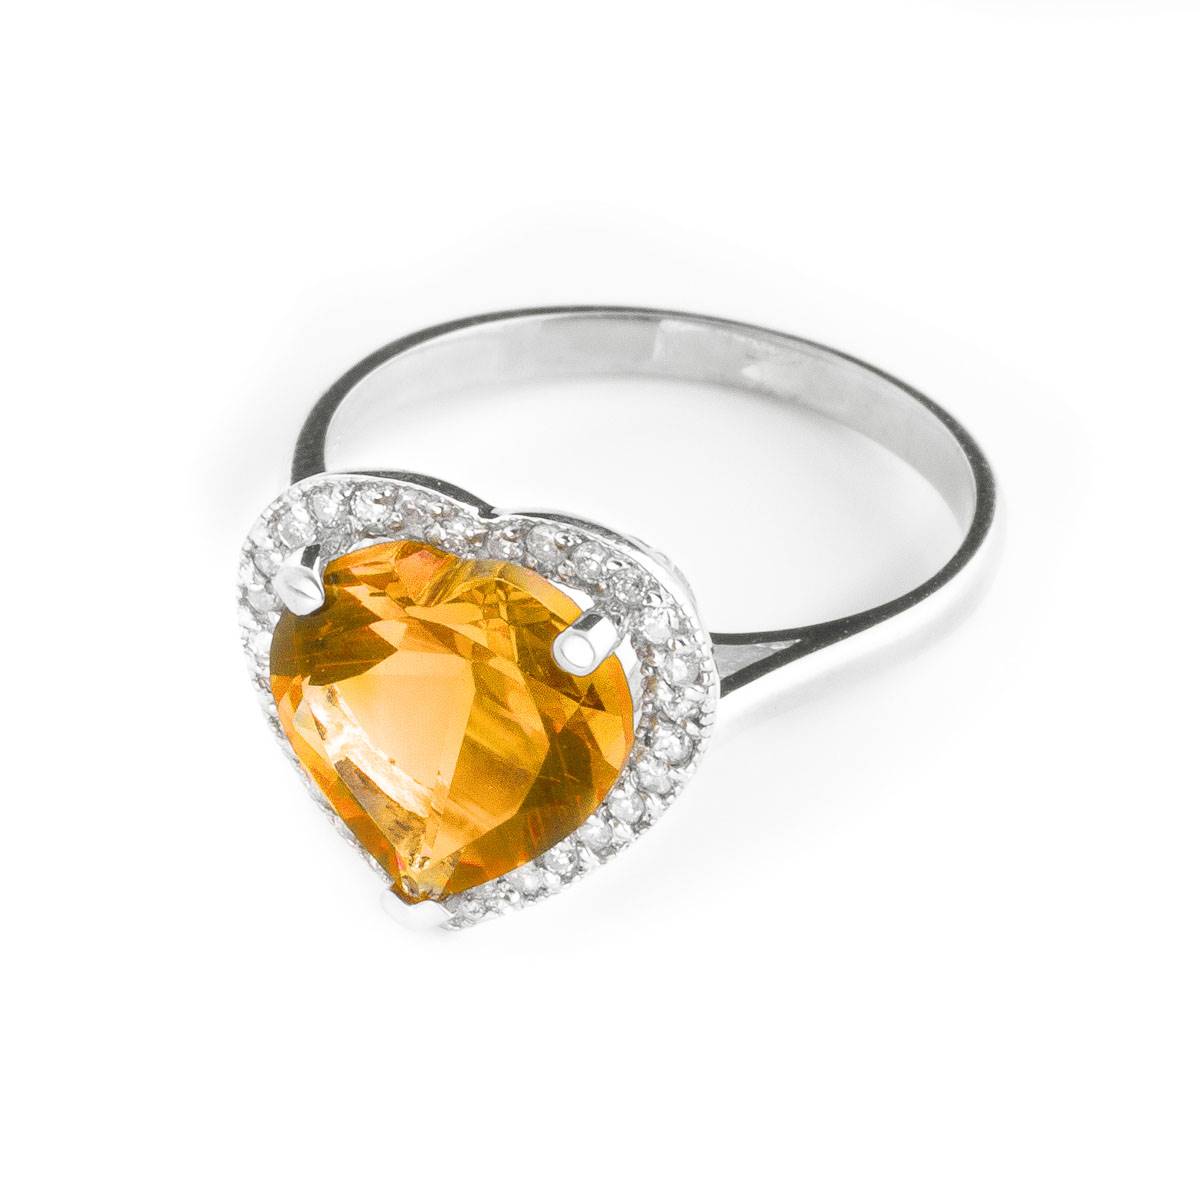 3.24 Carat 14K Solid White Gold Ring Diamond Heart Citrine